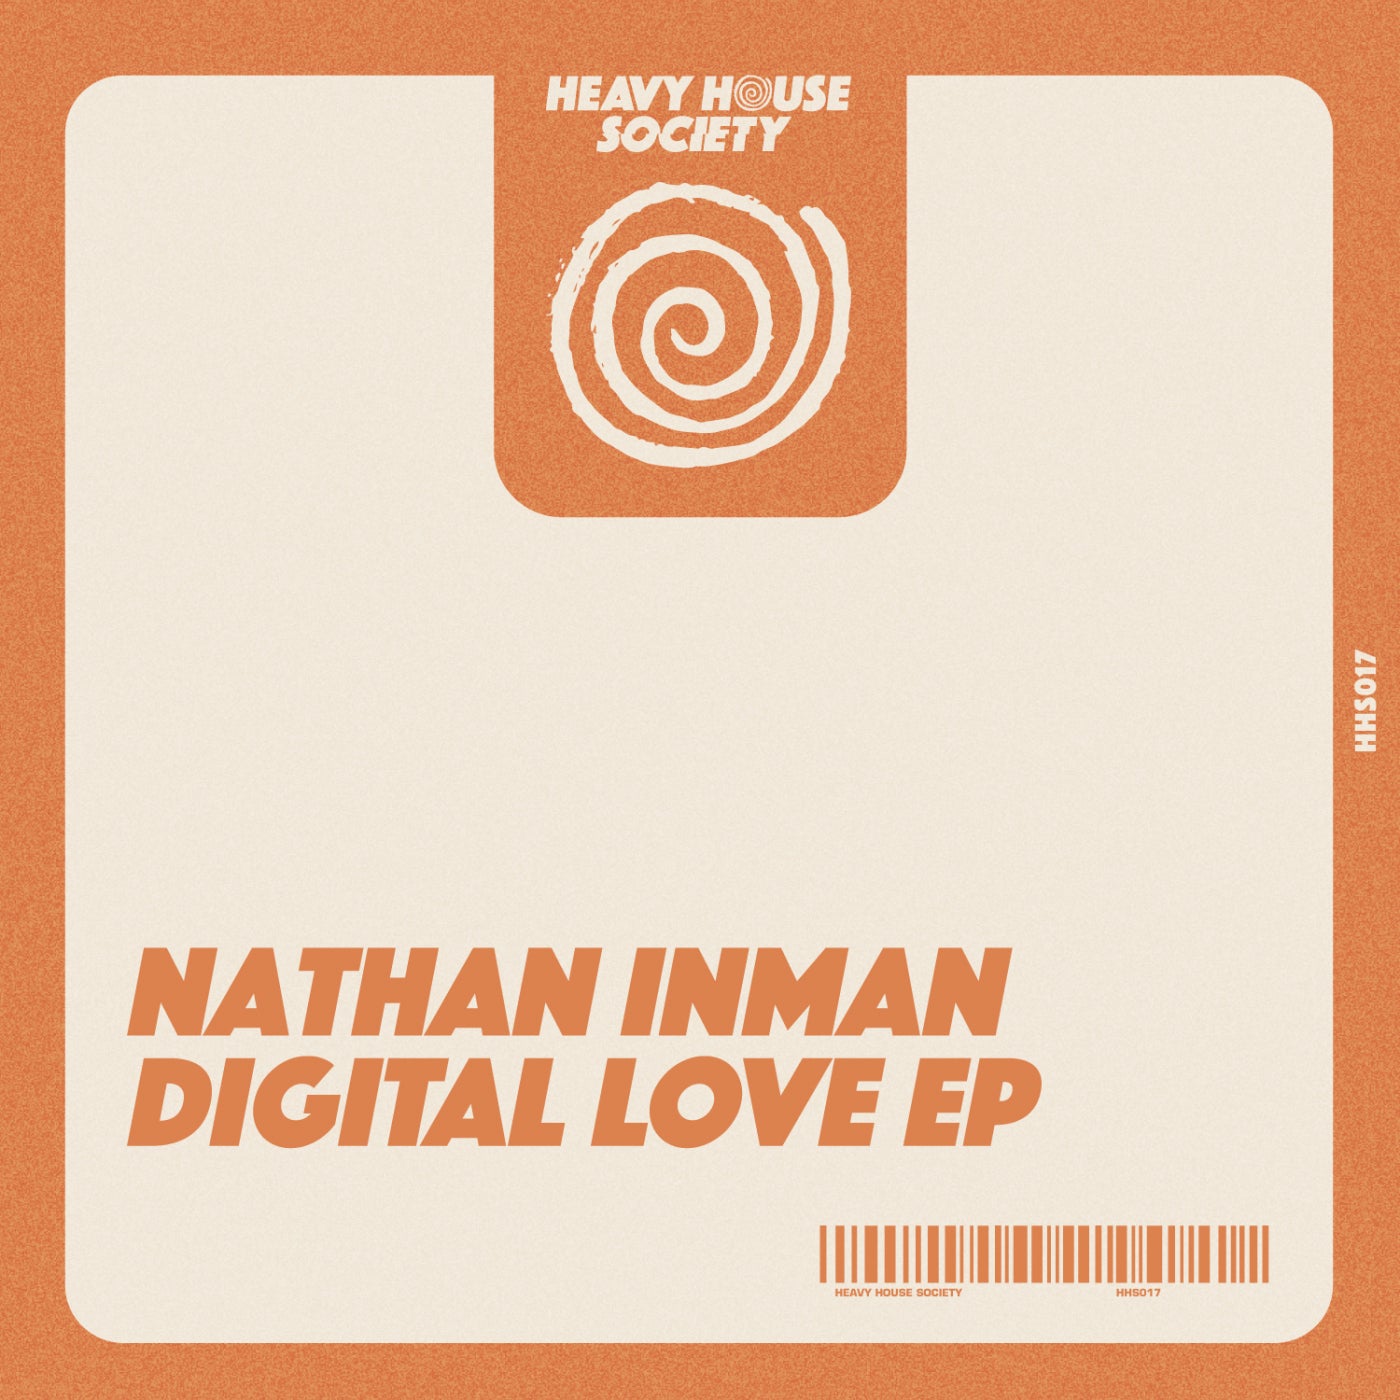 Nathan Inman - Digital Love EP [HHS017]